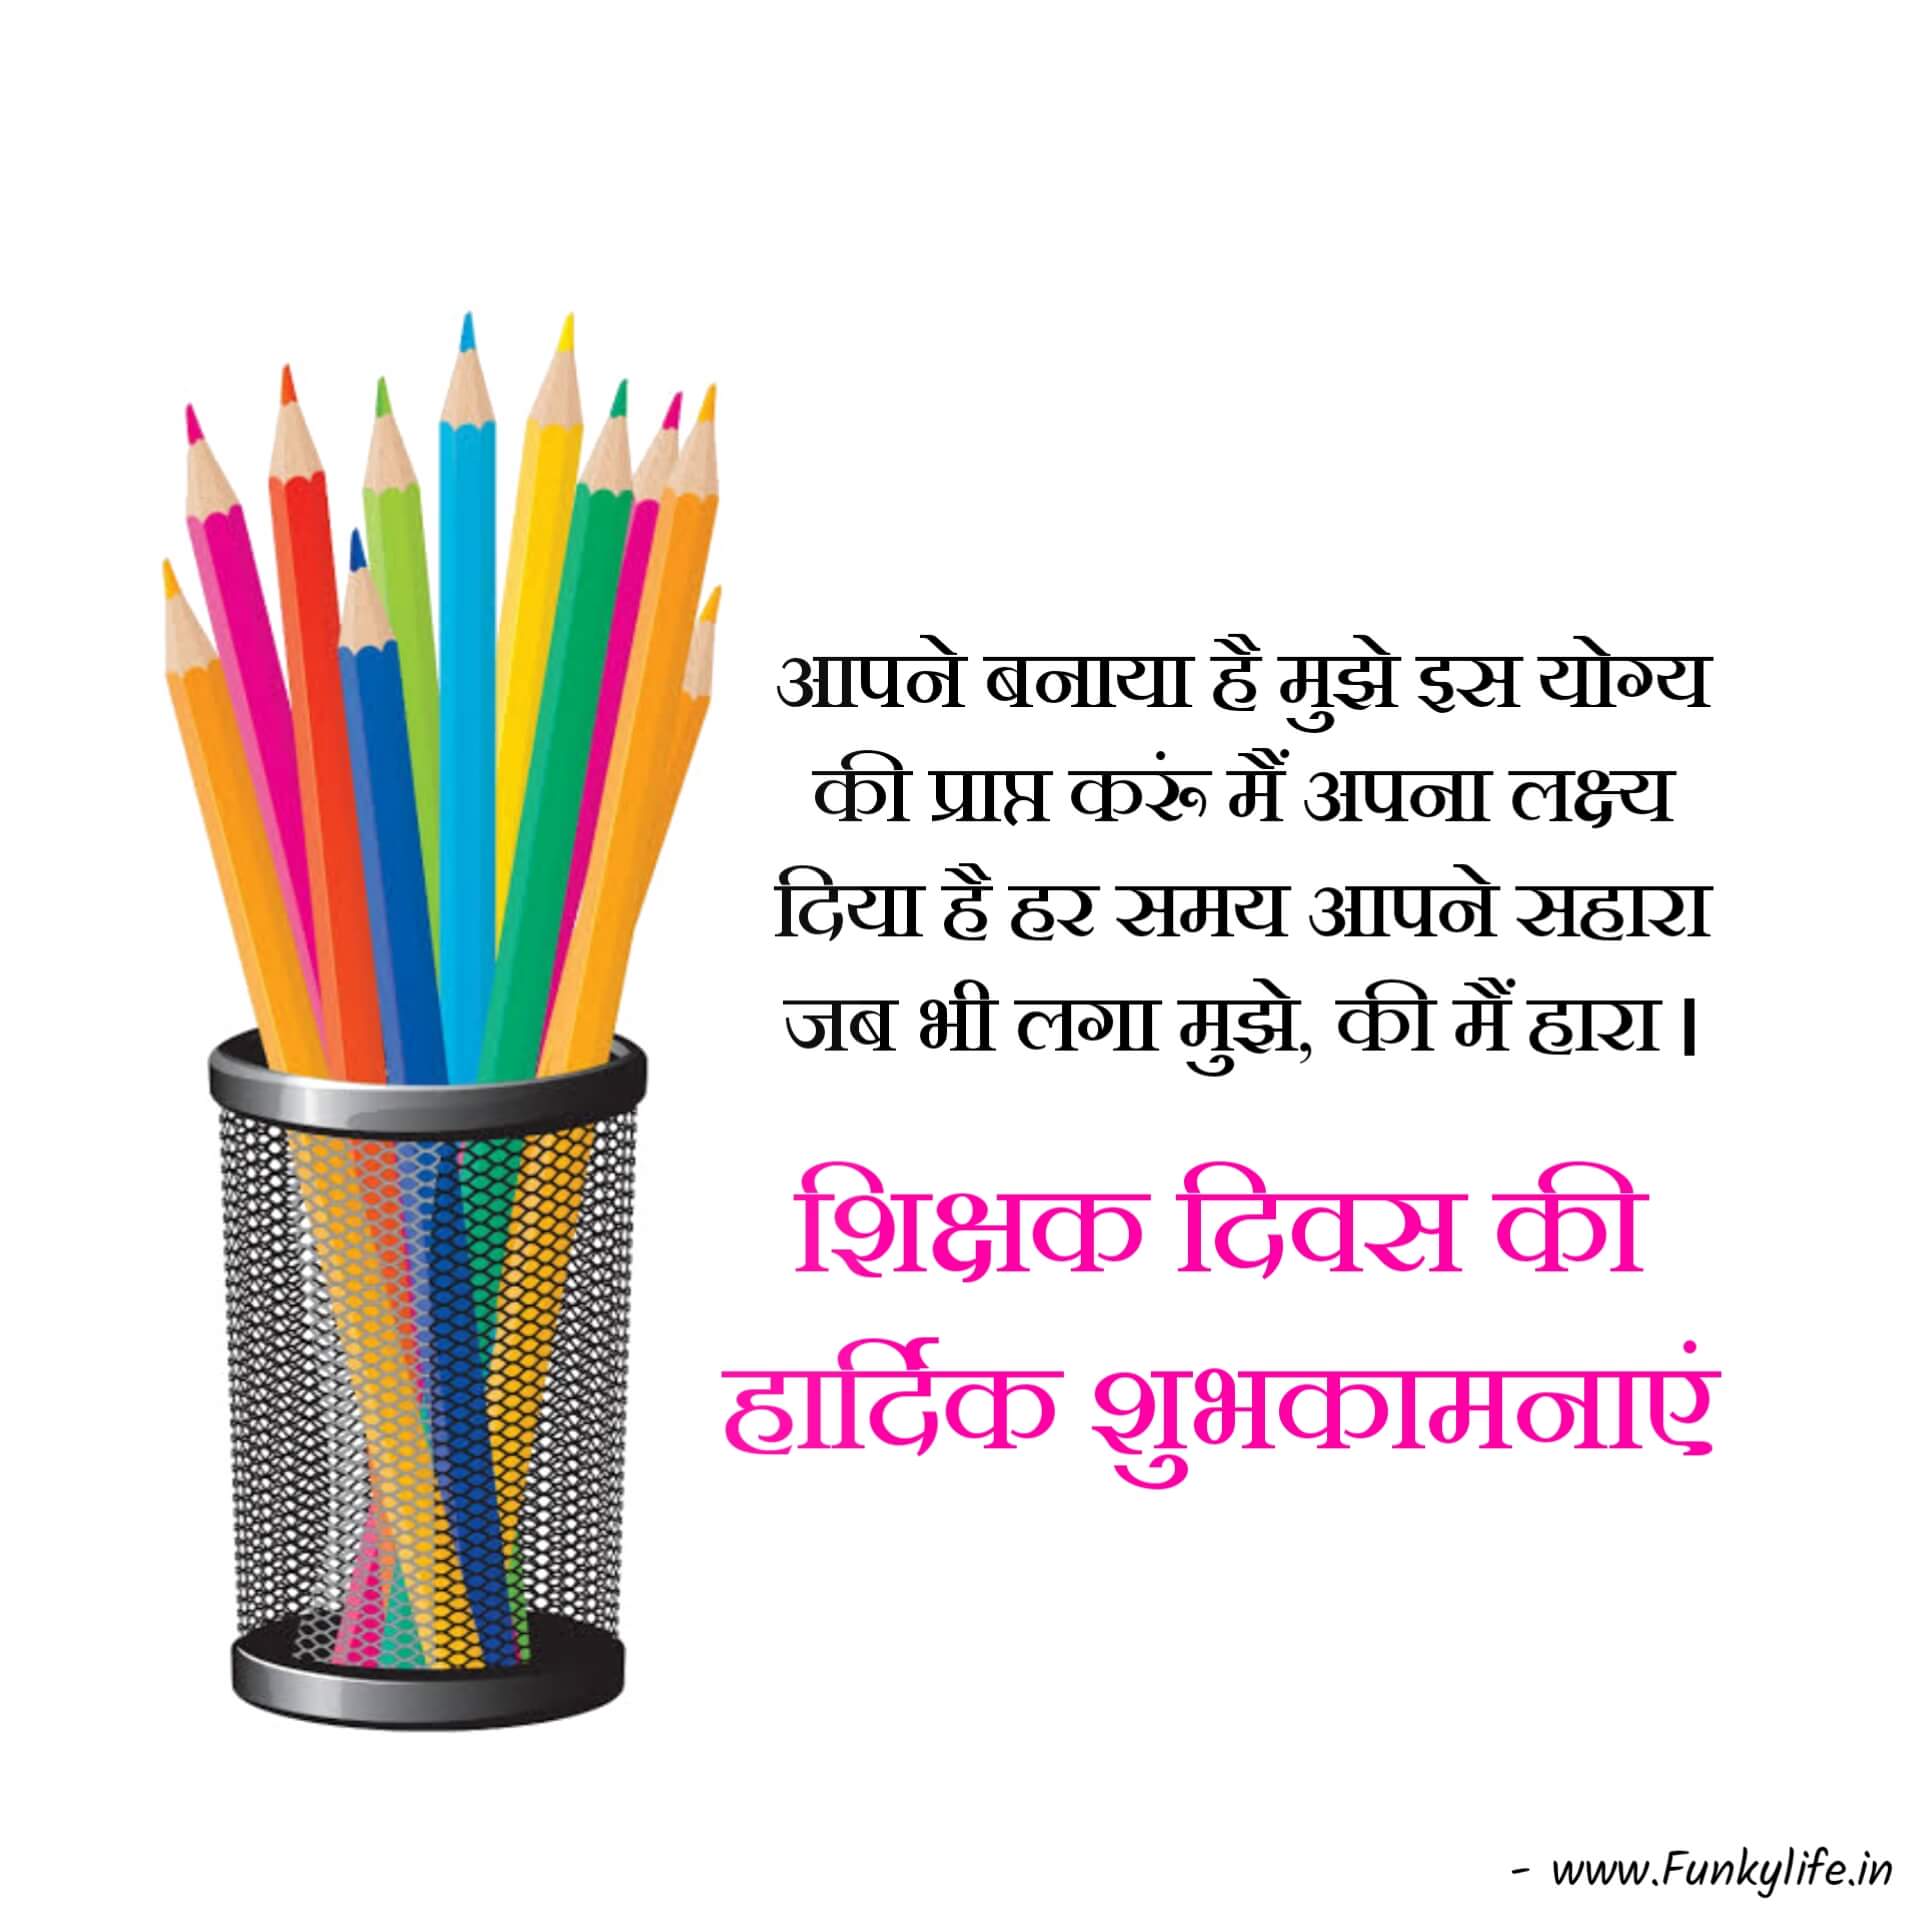 Teachers Day Wishes Photo in Hindi